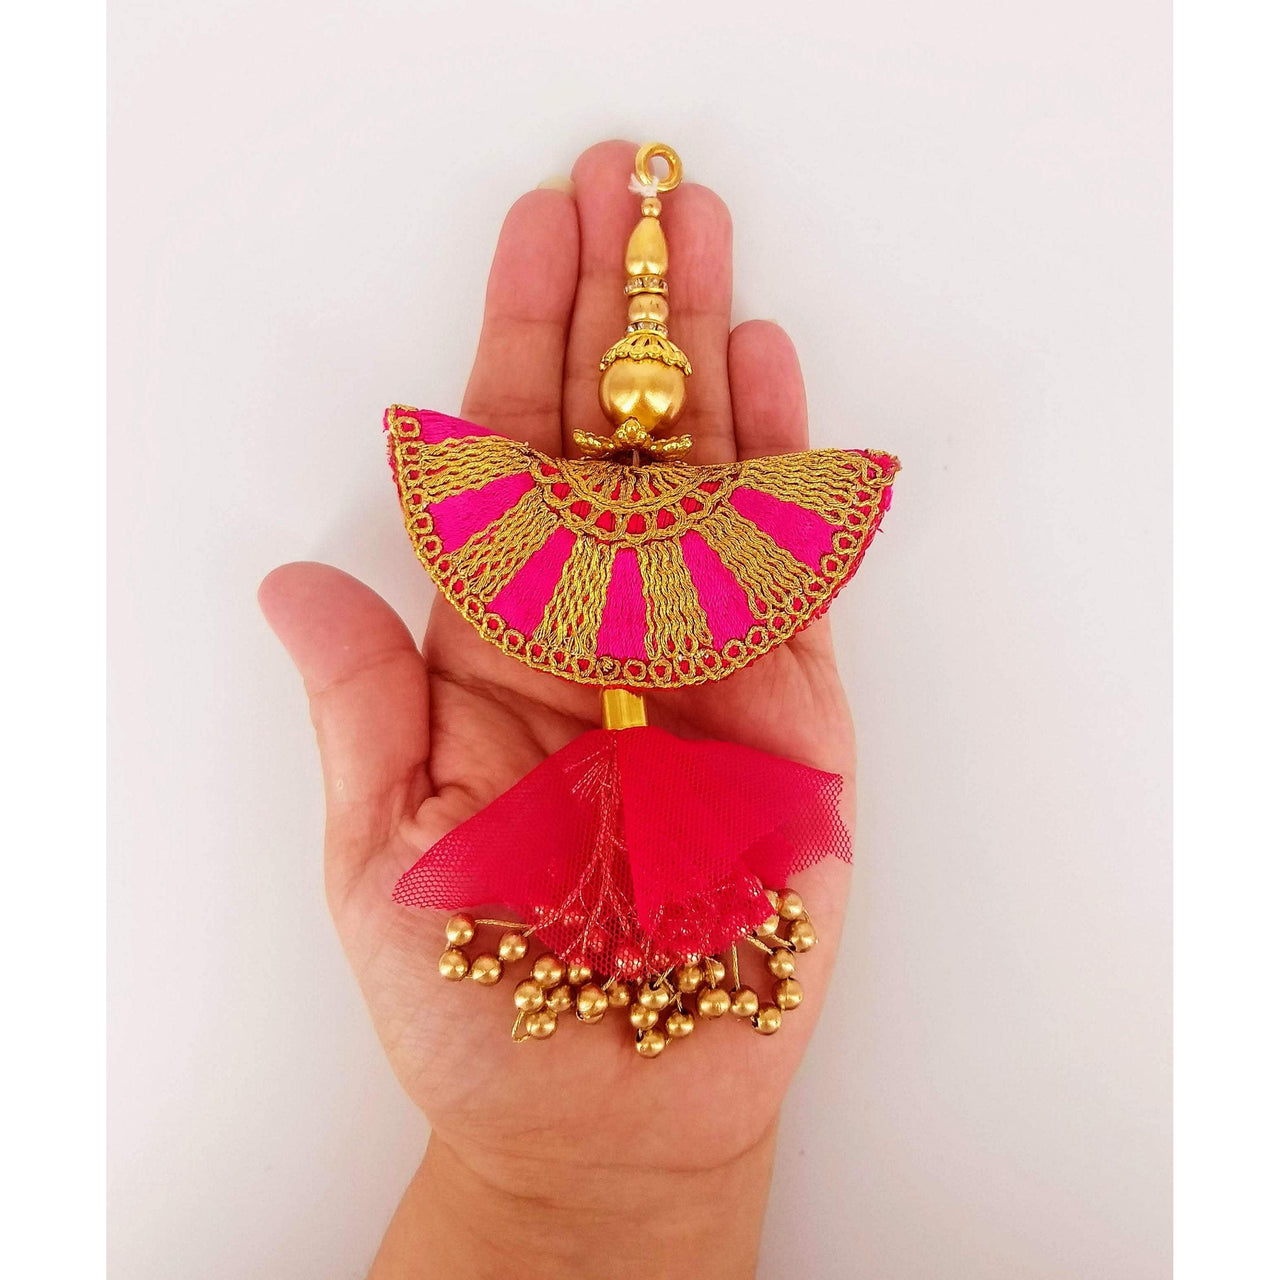 Fuchsia Pink Art Silk Fabric Tassel With Antique Gold Embroidery & Beads, Wedding Lehenga, Dress Blouses, Indian Embellishment